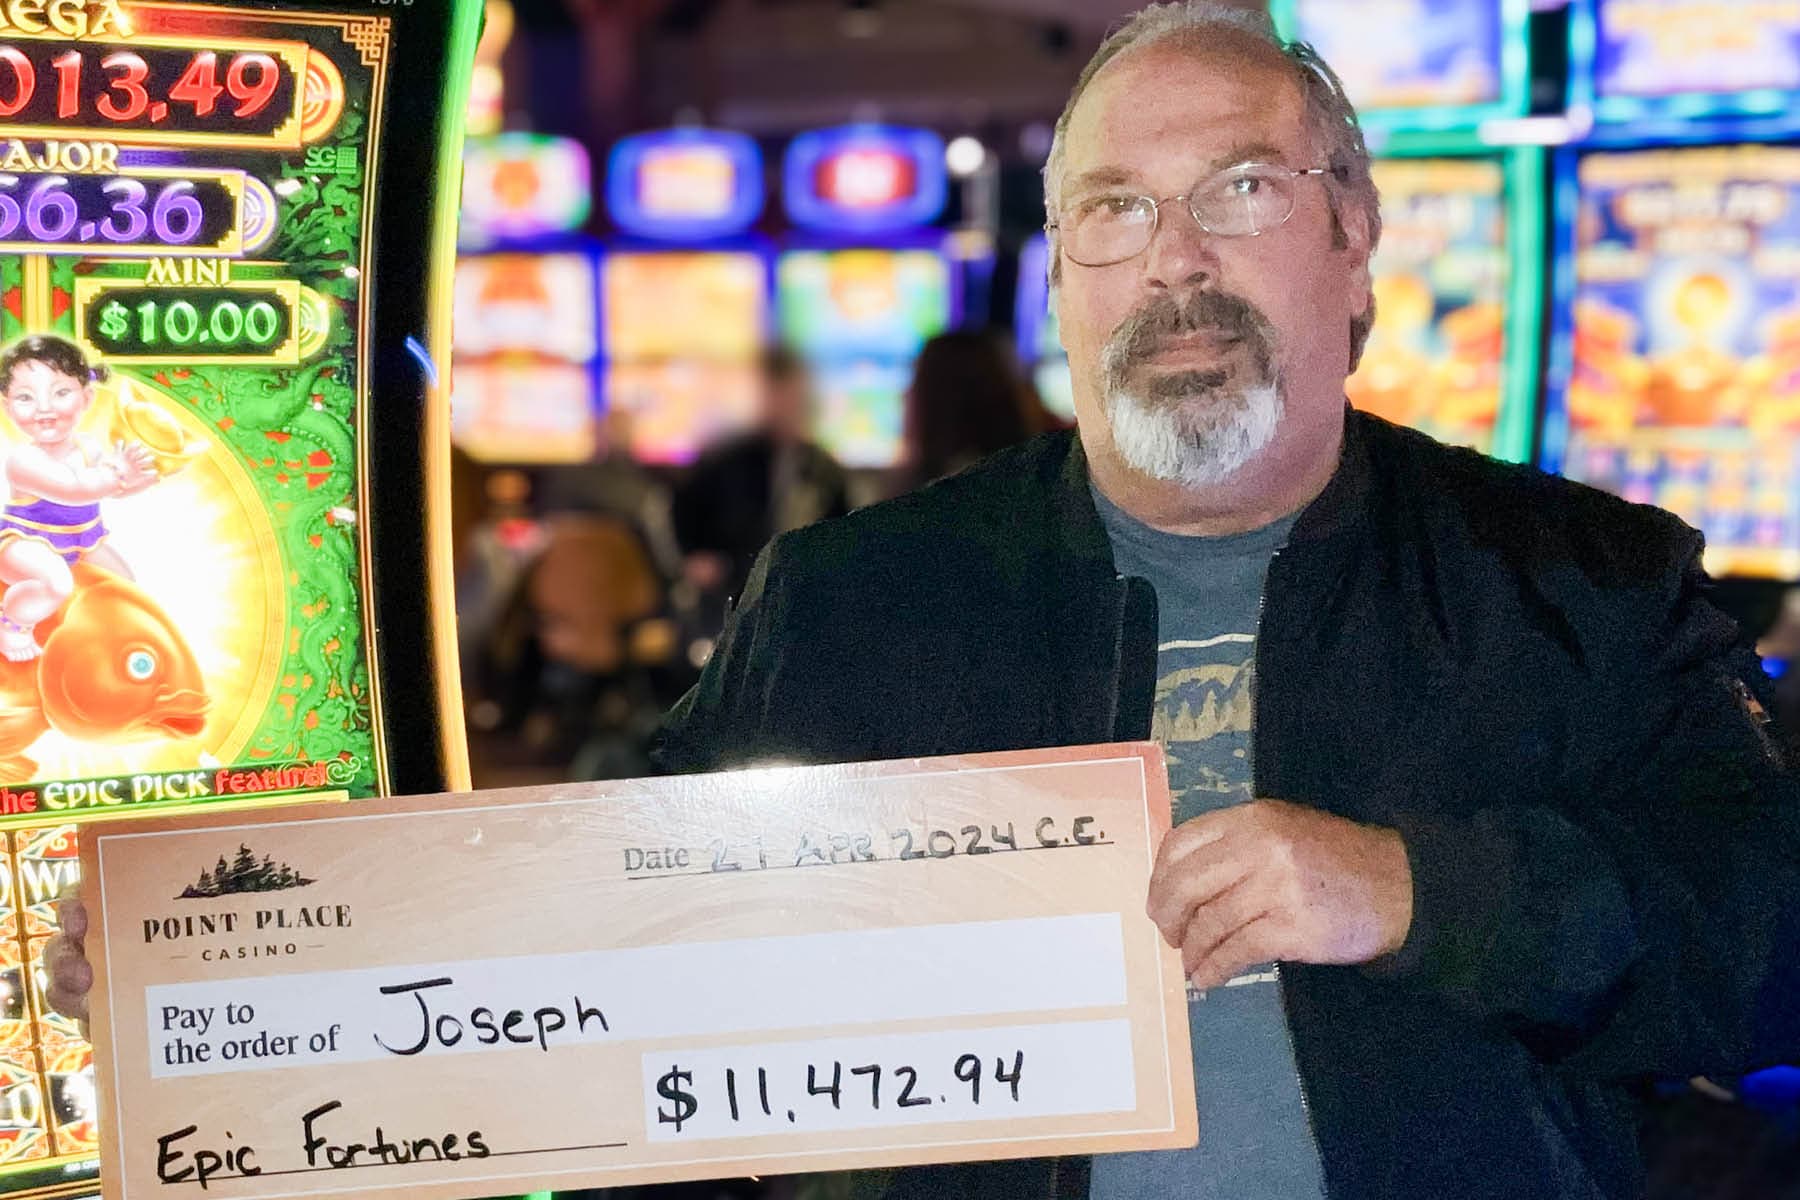 Joseph won $11,472